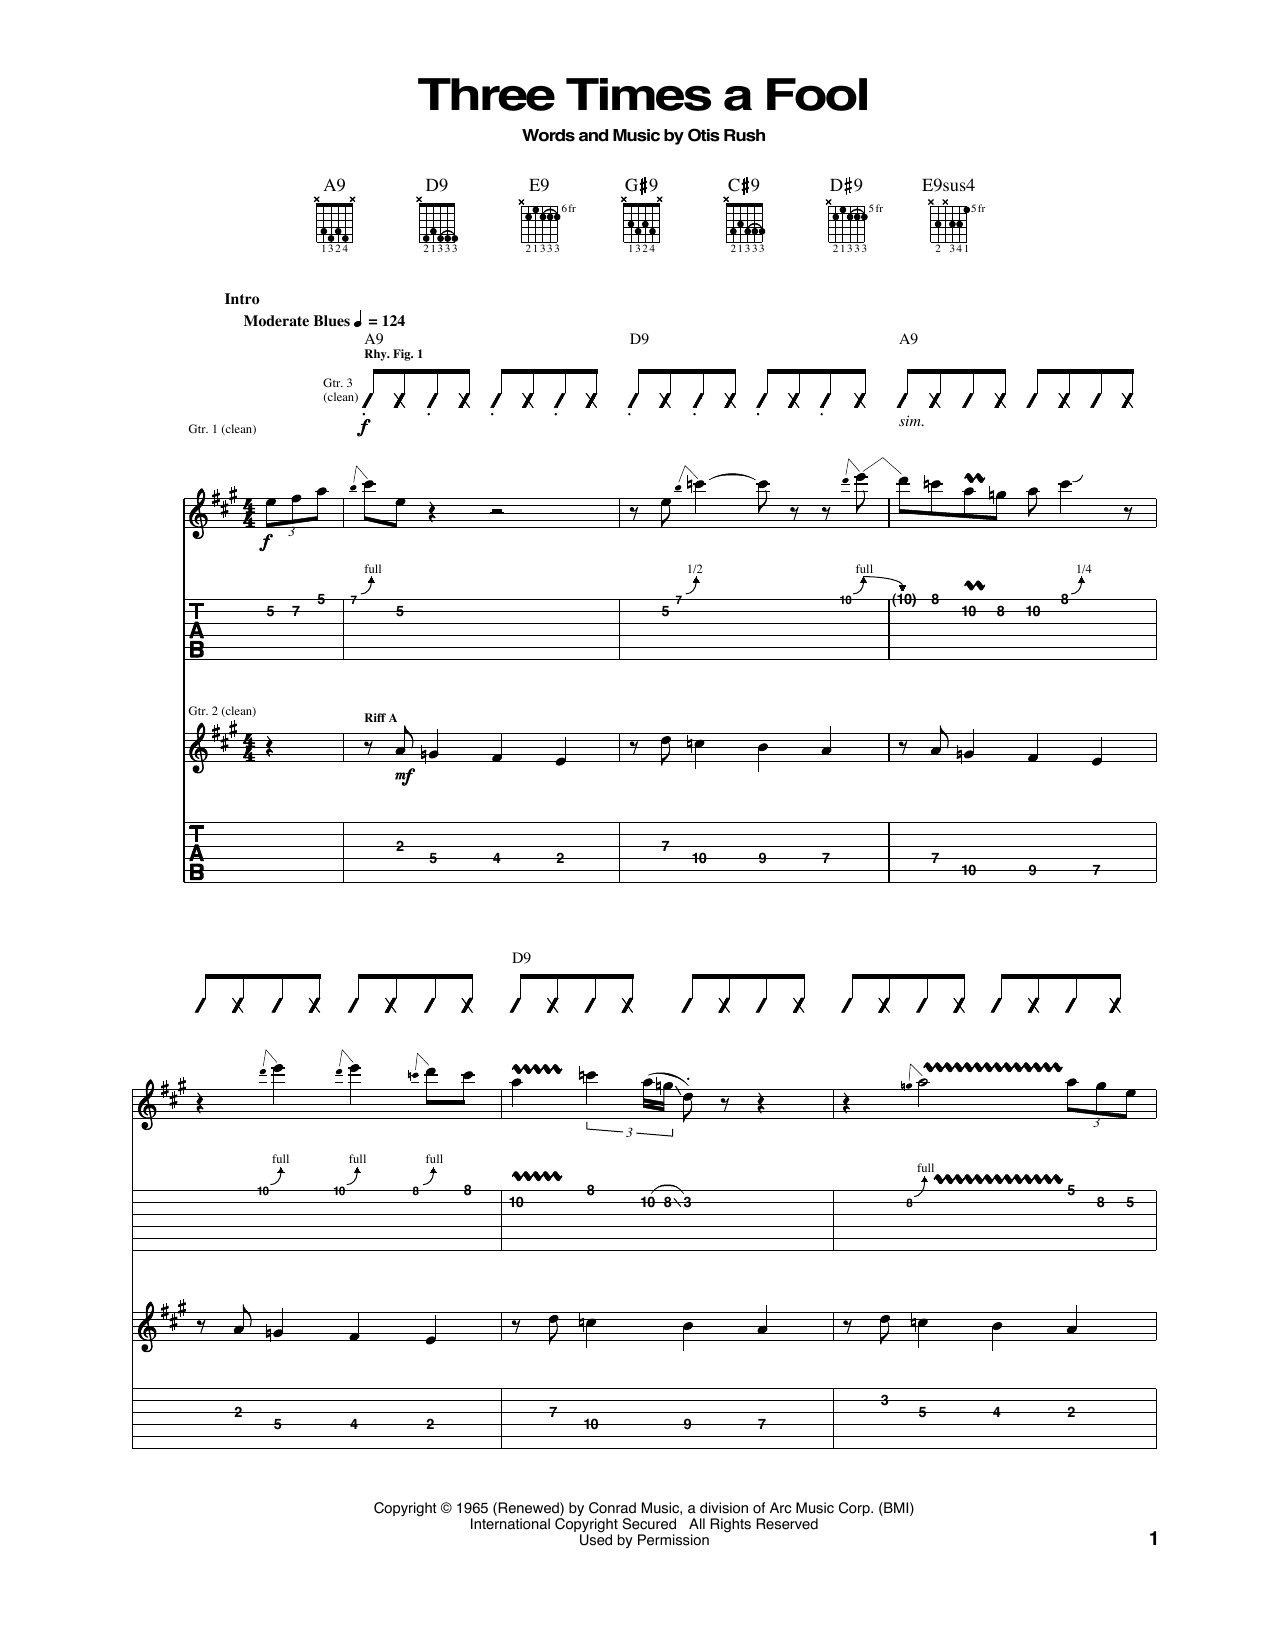 Otis Rush Three Times A Fool Sheet Music Notes & Chords for Guitar Tab - Download or Print PDF